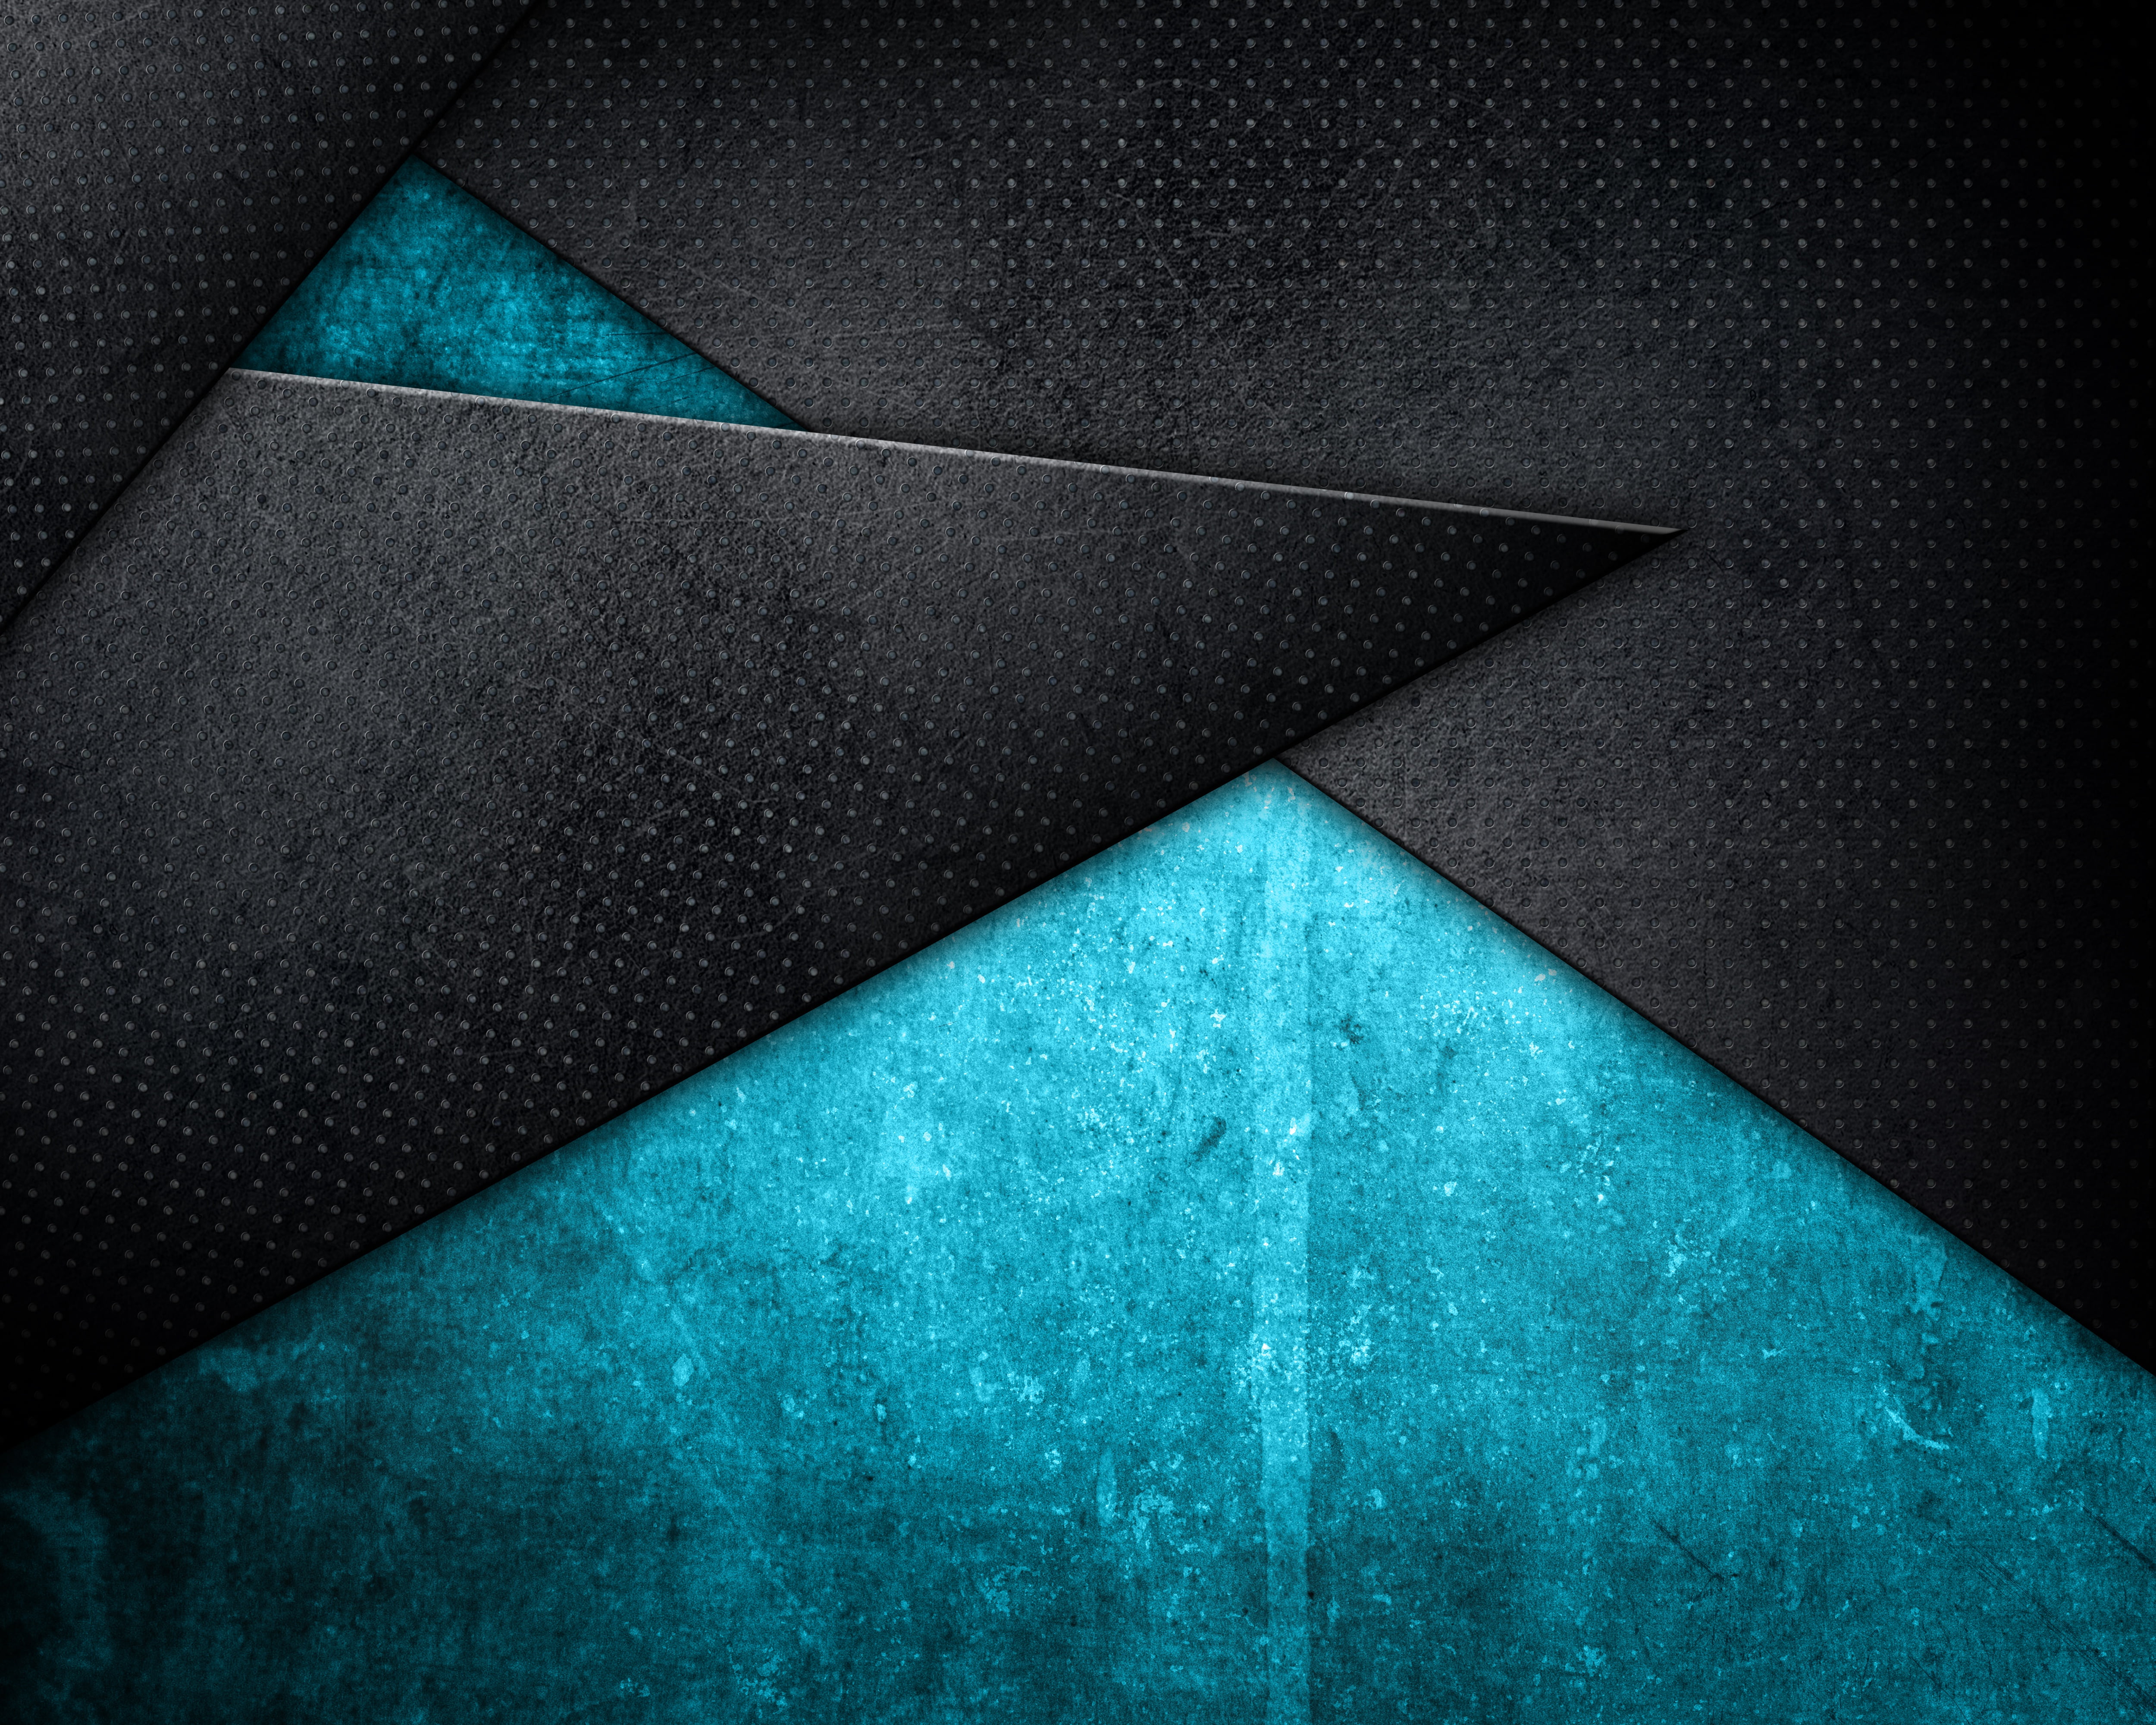 black textile, digital art, abstract, texture, blue, triangle shape